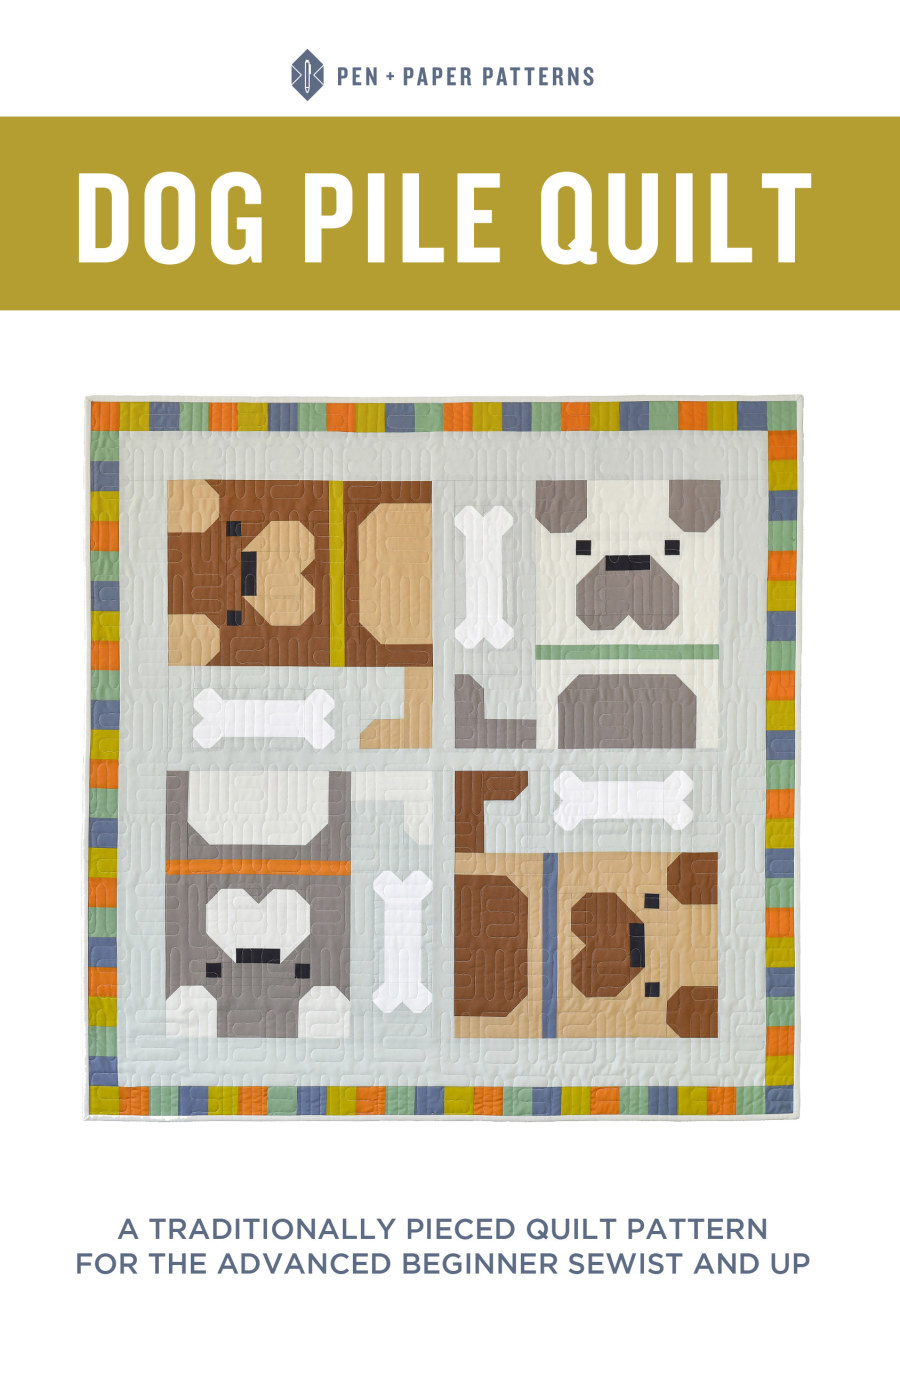 Dog Pile Quilt Pattern by Pen + Paper